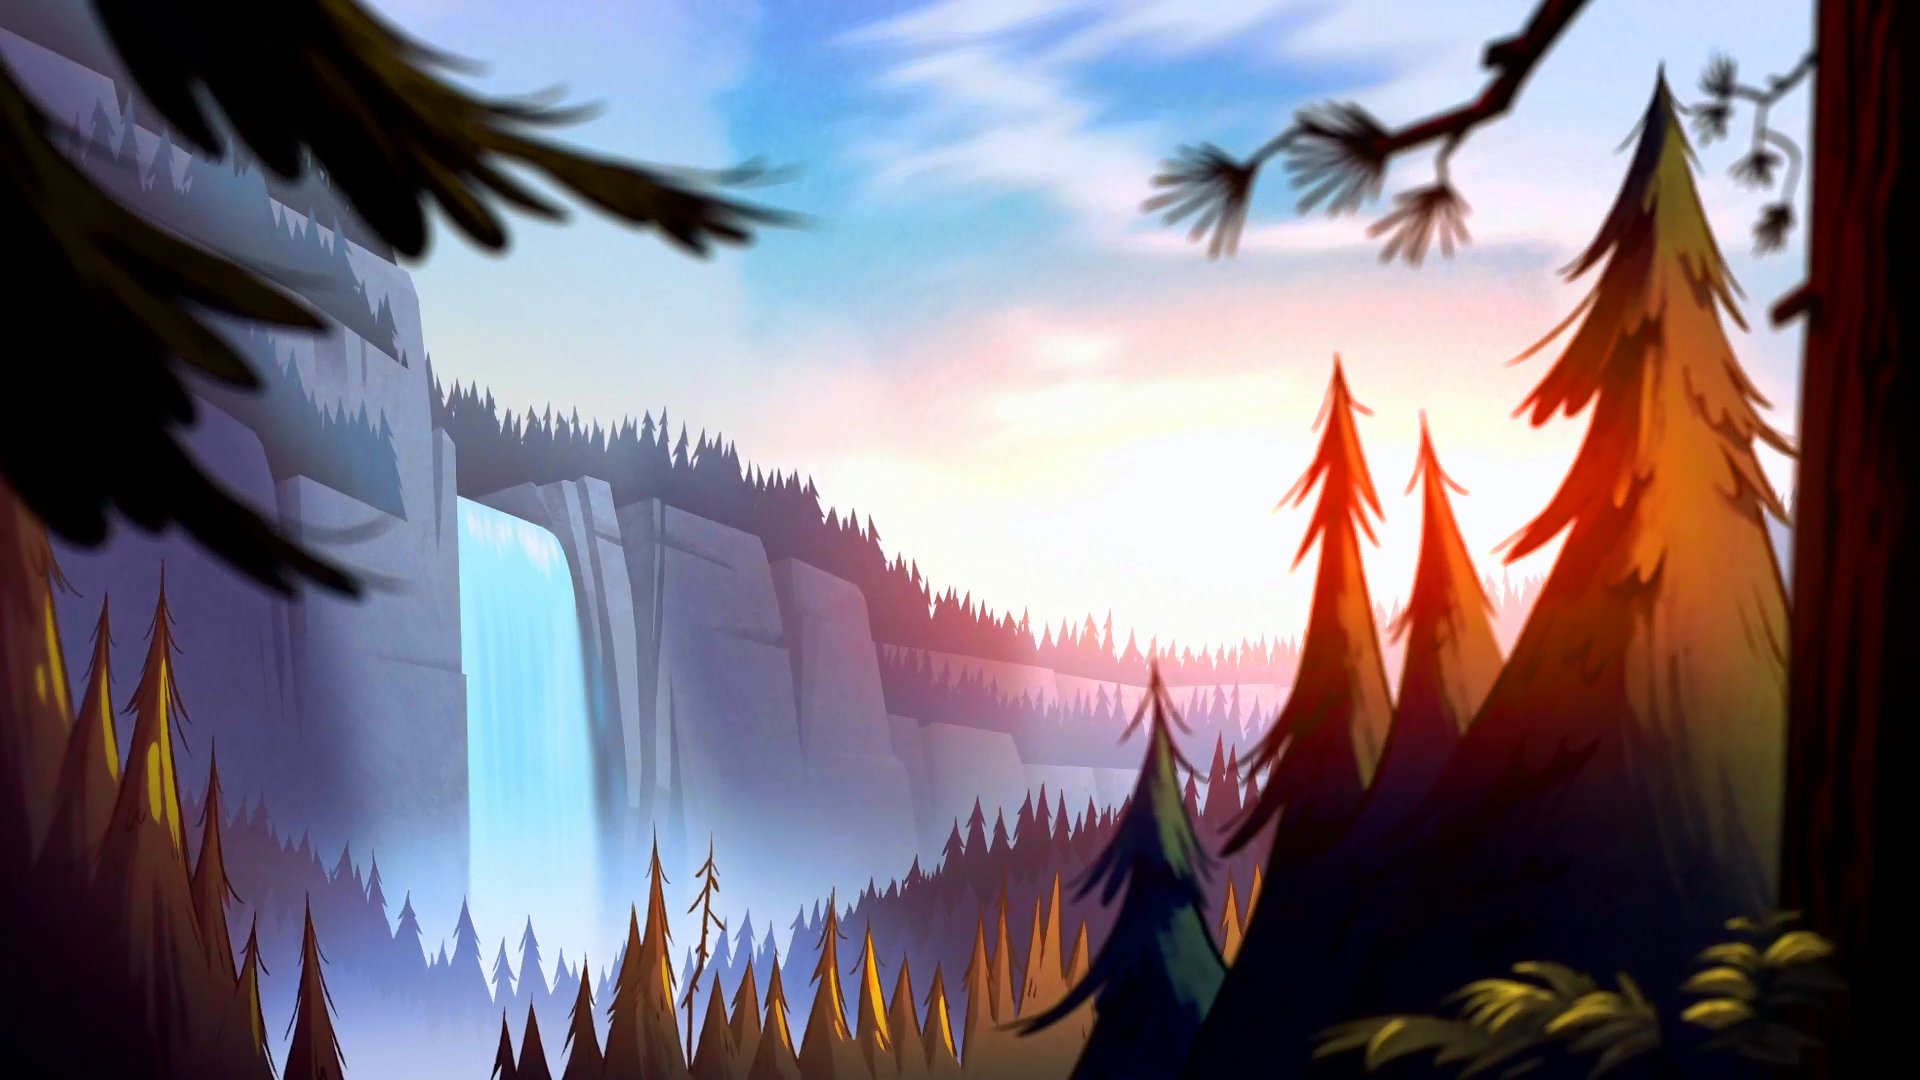 TV Show Gravity Falls HD Wallpaper | Background Image